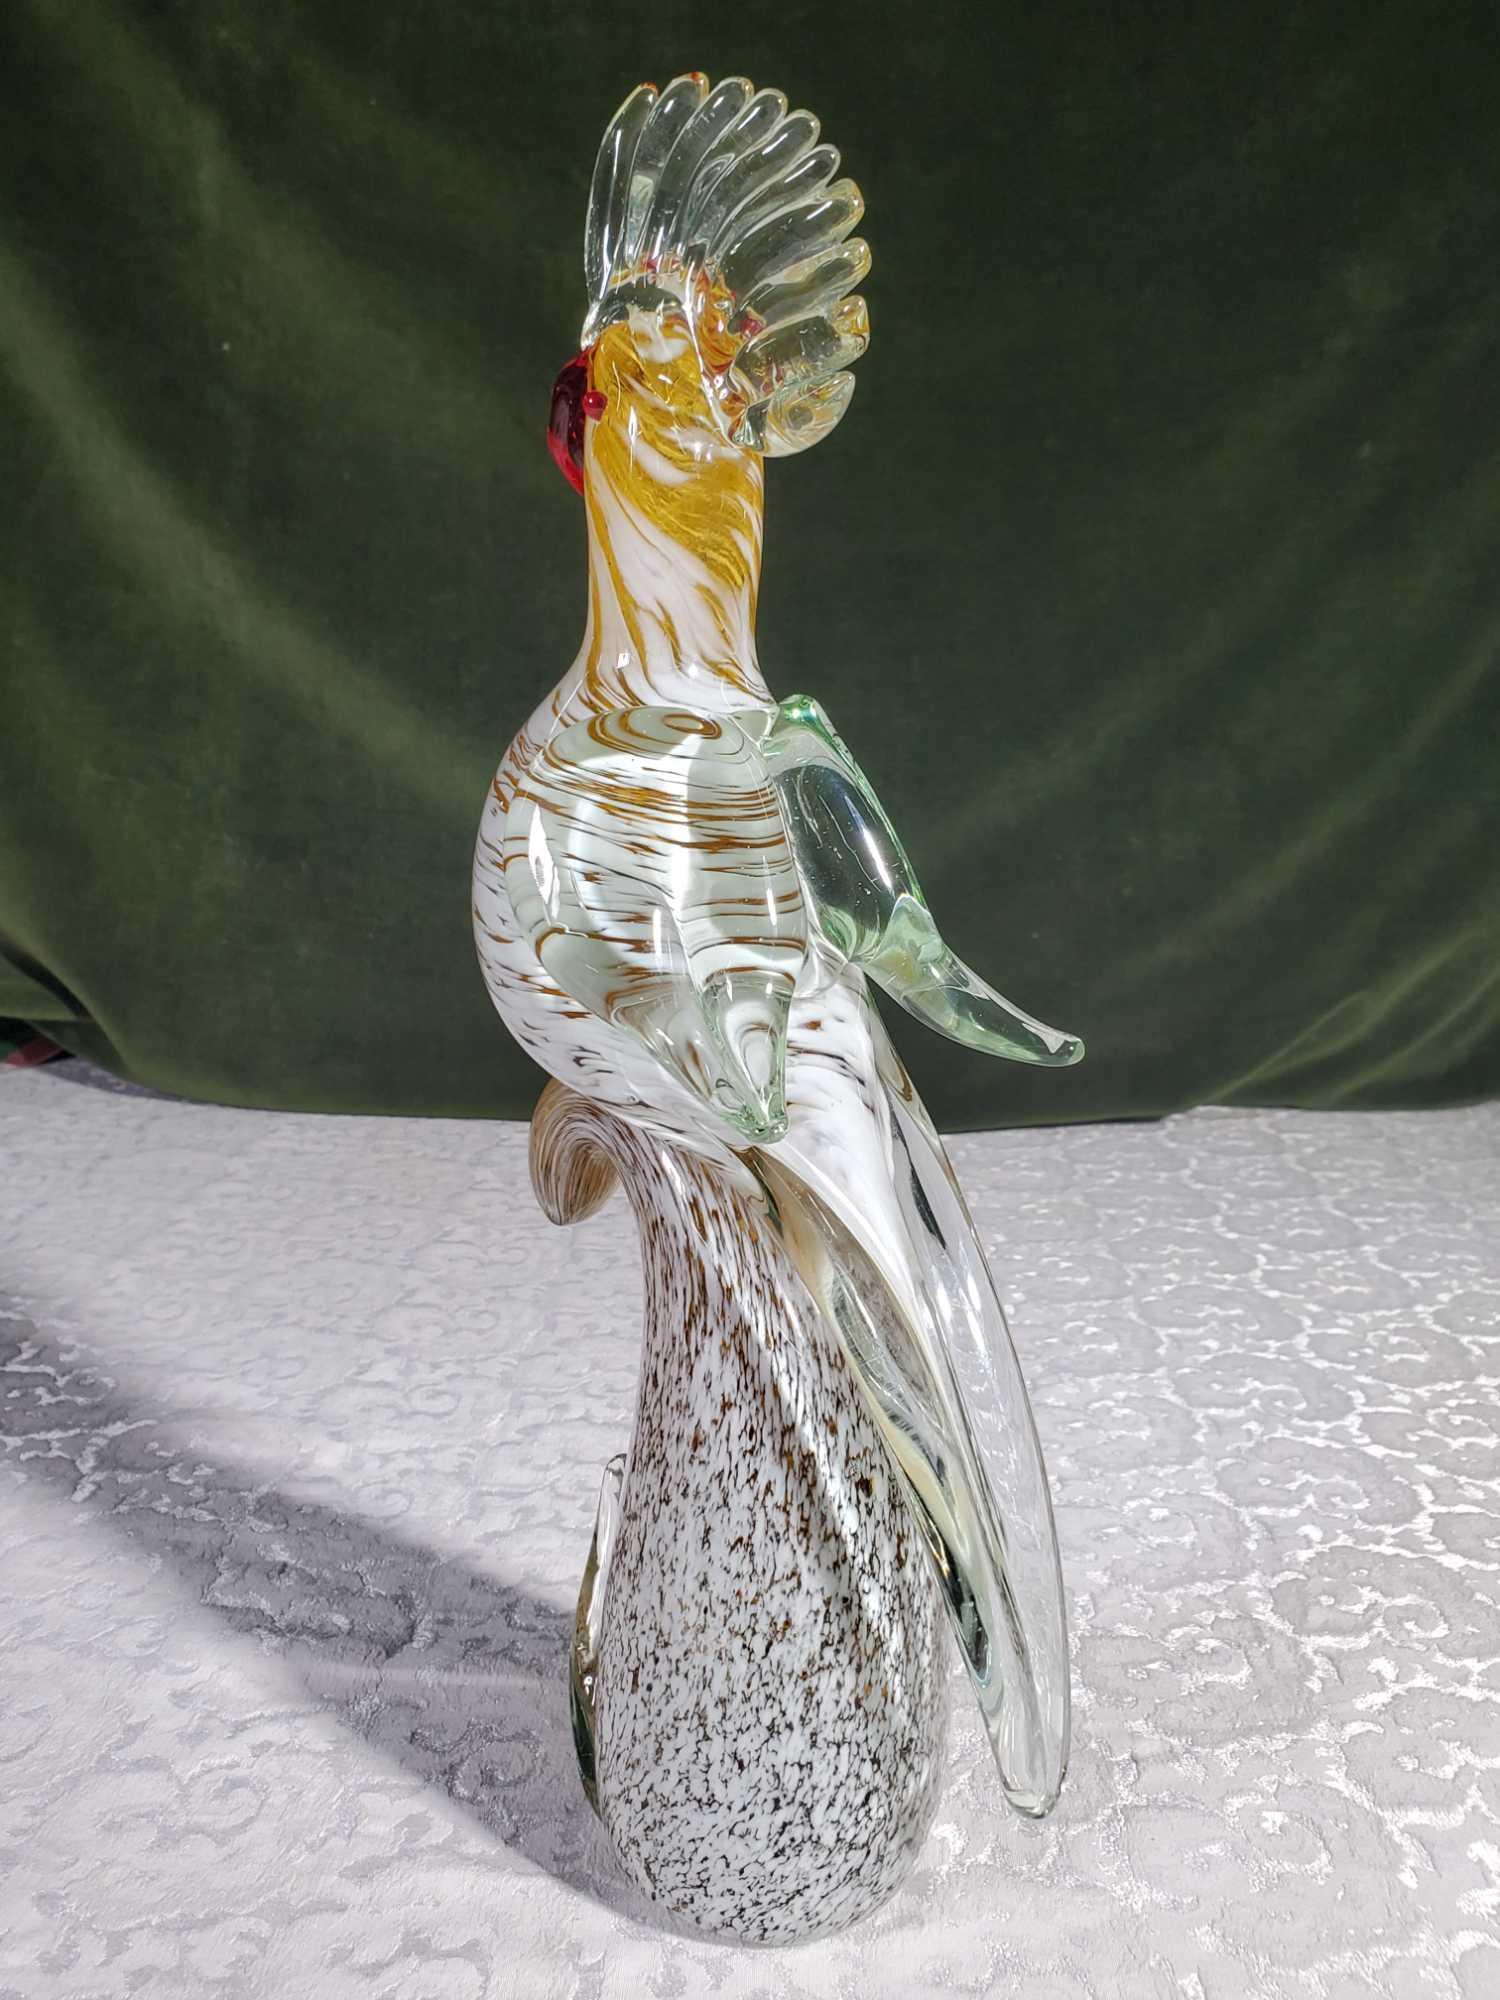 4 Art Glass Bird and Animal Figures